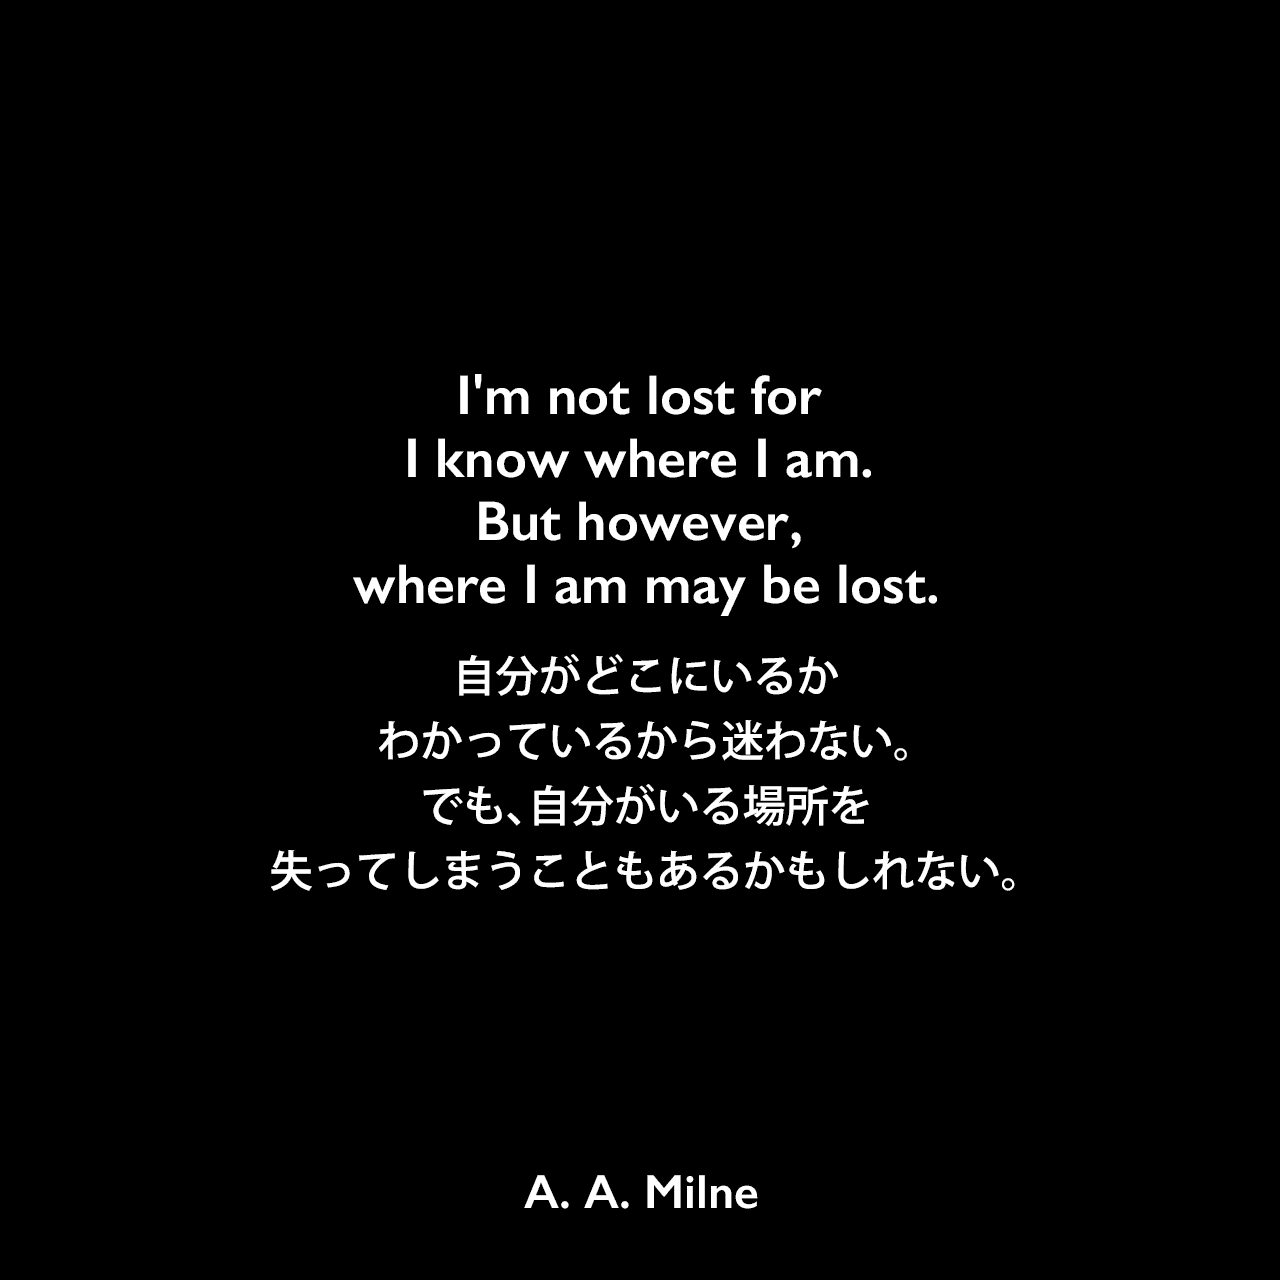 I'm not lost for I know where I am. But however, where I am may be lost.自分がどこにいるかわかっているから迷わない。でも、自分がいる場所を失ってしまうこともあるかもしれない。A. A. Milne